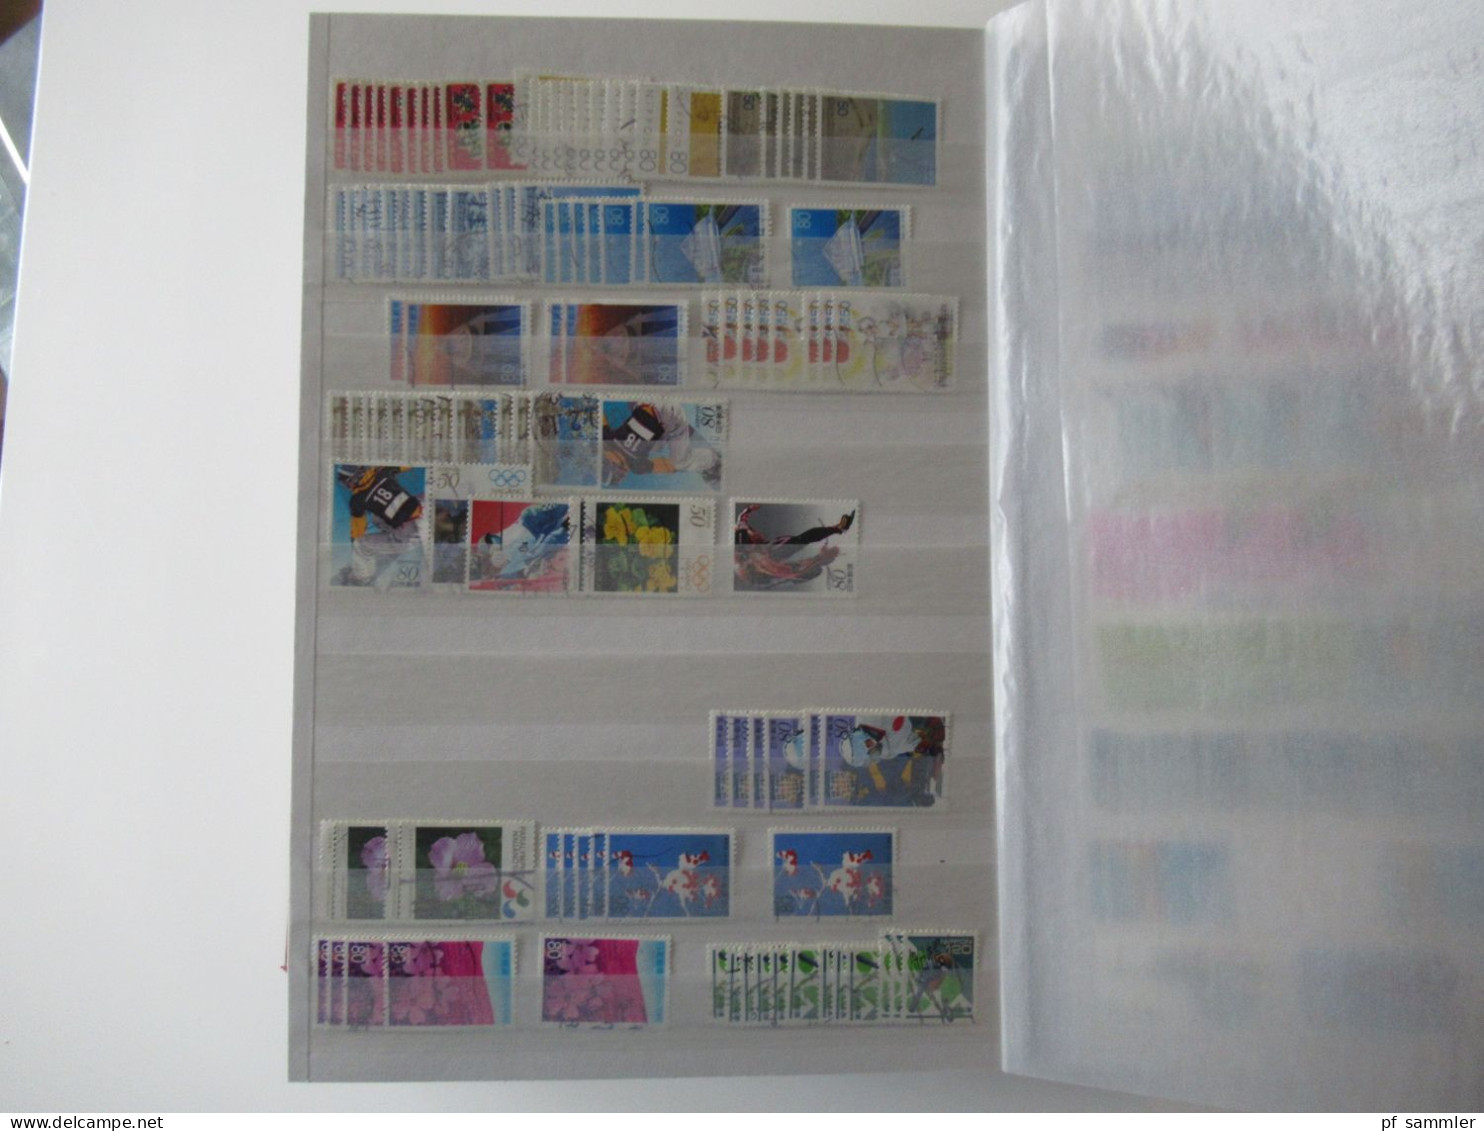 Sammlung / dickes Lagerbuch Asien Japan ab ca. 1980 - ca. 1999 tausende gestempelte Marken / Fundgrube!!